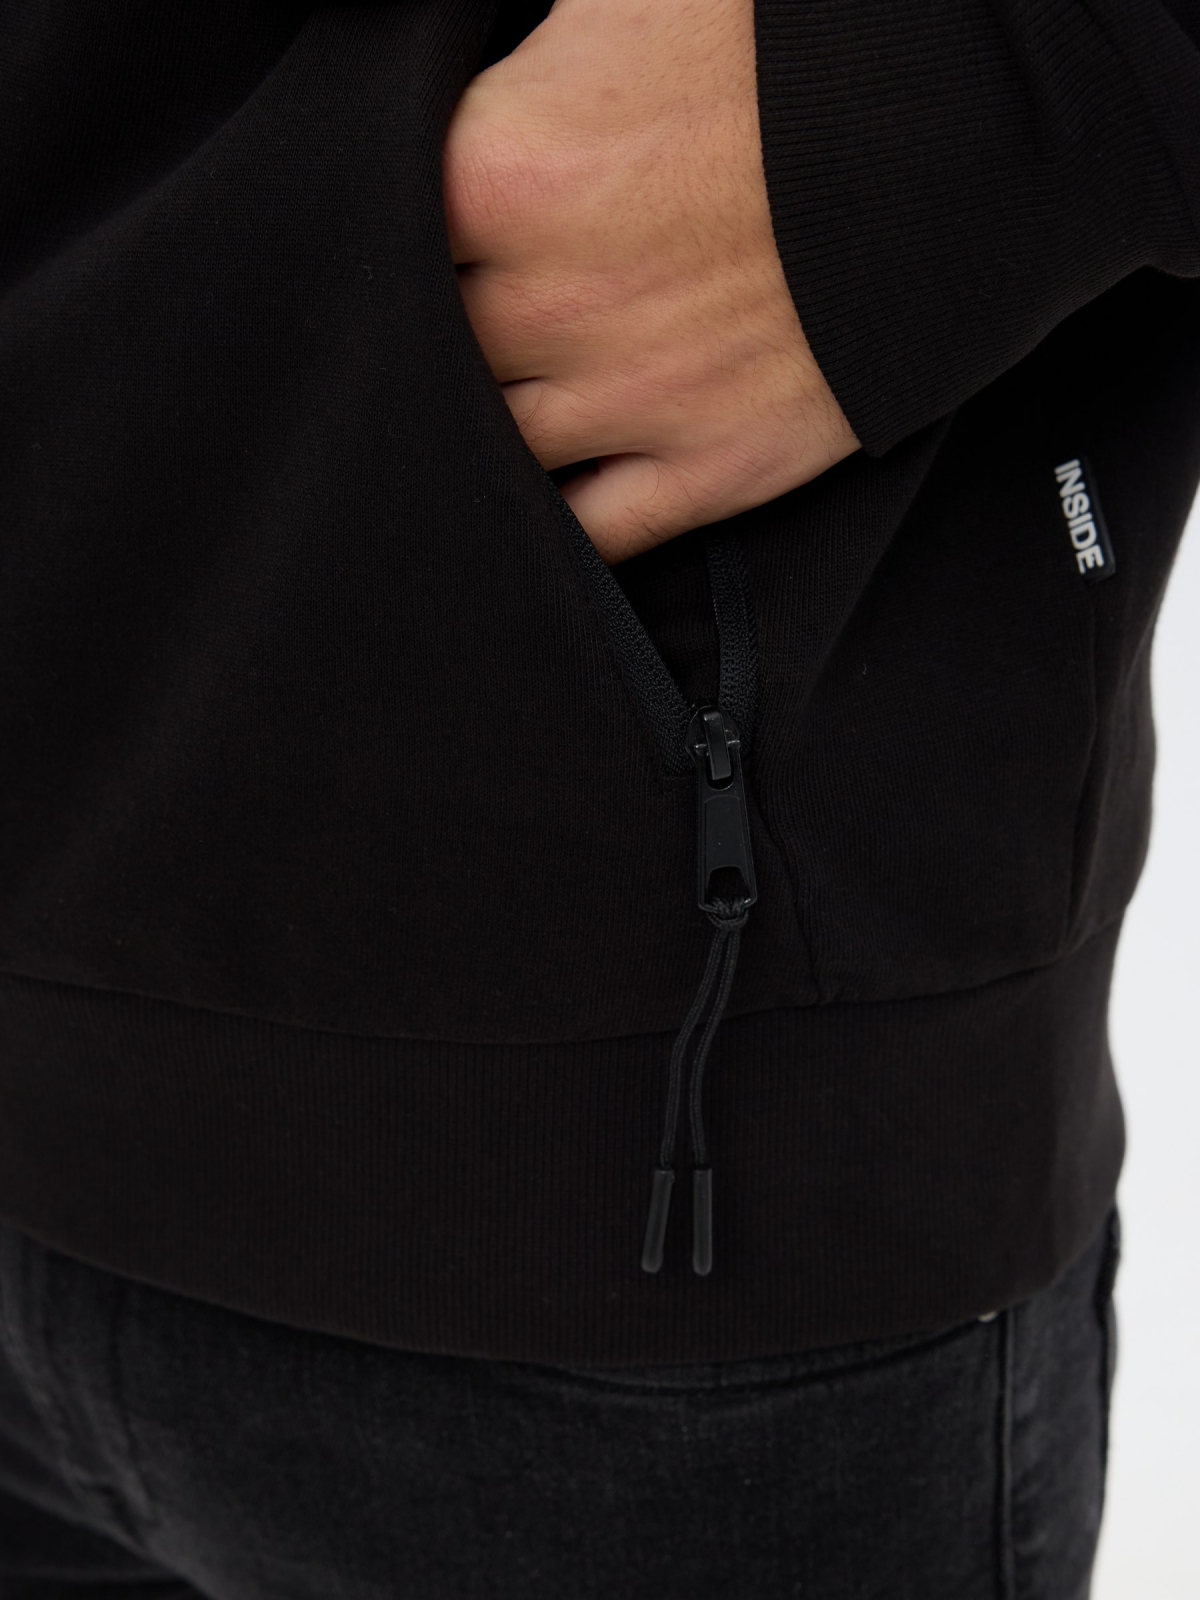 Zipper hooded sweatshirt black detail view